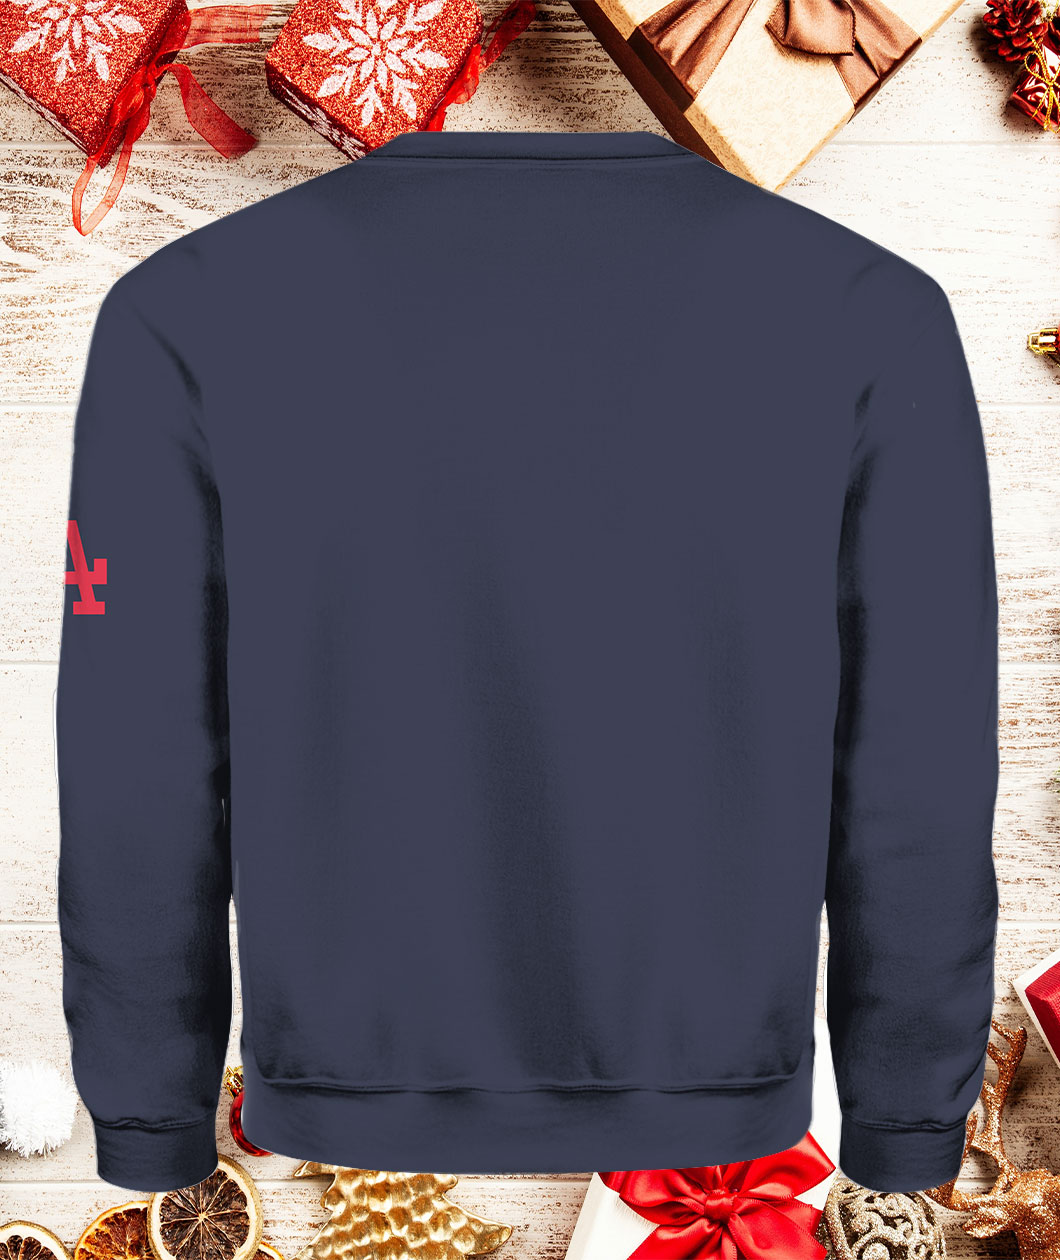 Dodgers Christmas Sweater - Lelemoon